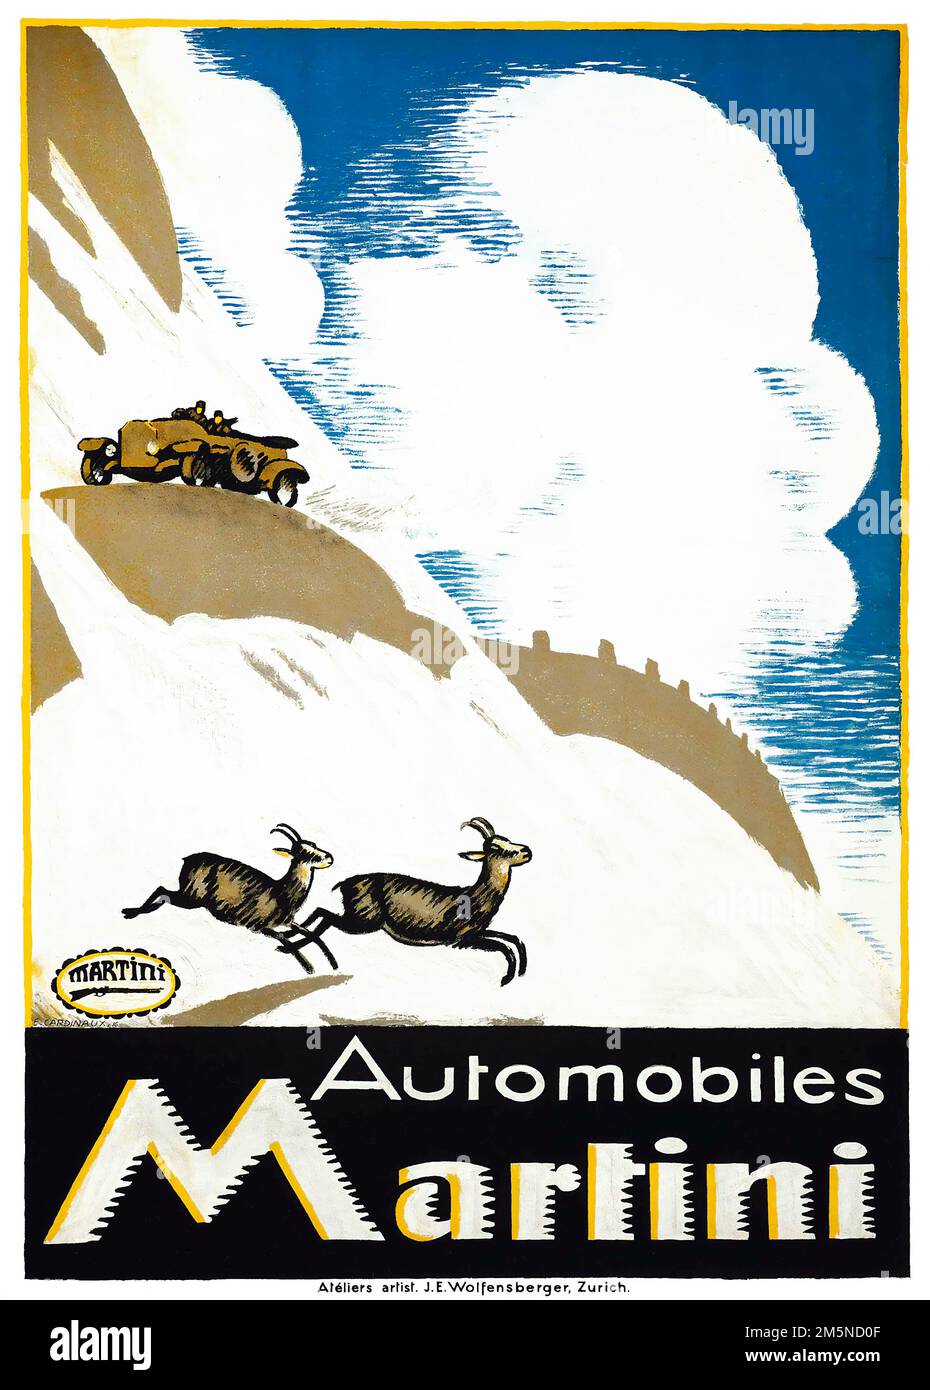 Vintage car poster - Emil Cardinaux (1877-1936) AUTOMOBILES MARTINI Stock Photo